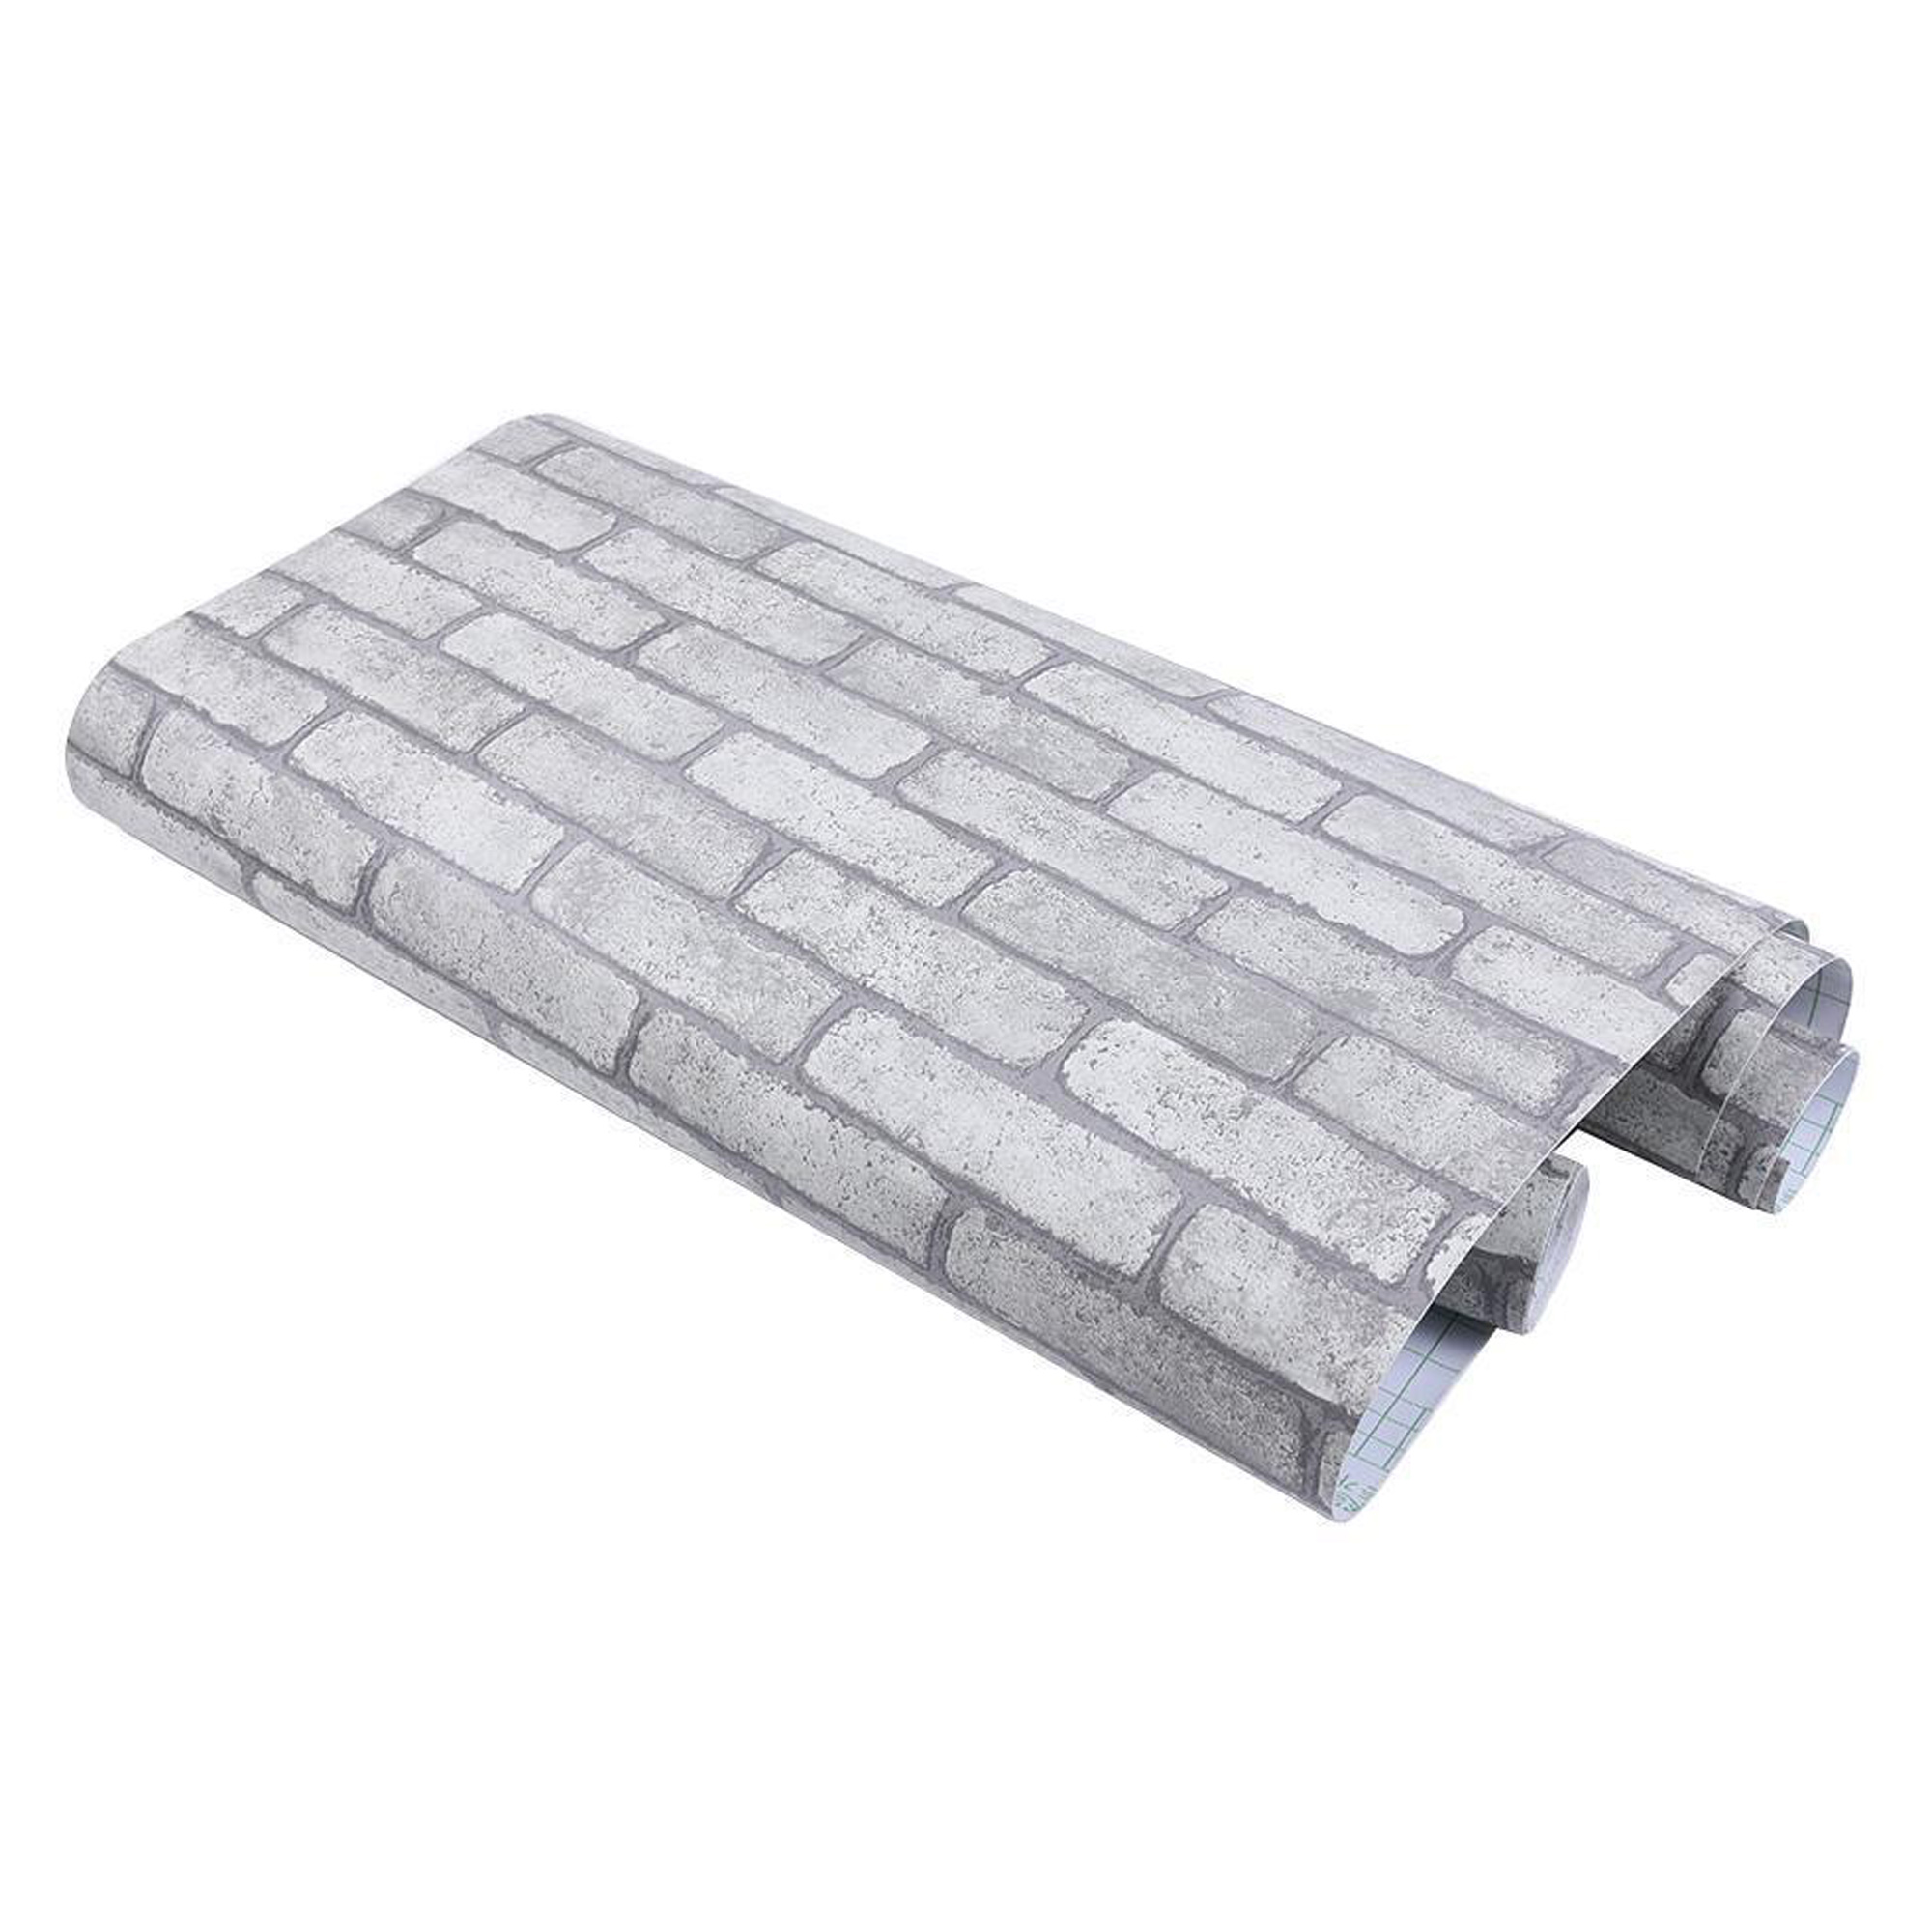 39.4''/ 196.8''/ 393.7'' 3D Brick Wallpaper, Peel and Stick Wallpaper Stone Brick Wallpaper Self Adhesive Removable Wallpaper Textured Brick Wallpaper for Background/Kitchen/Study Room - image 4 of 4